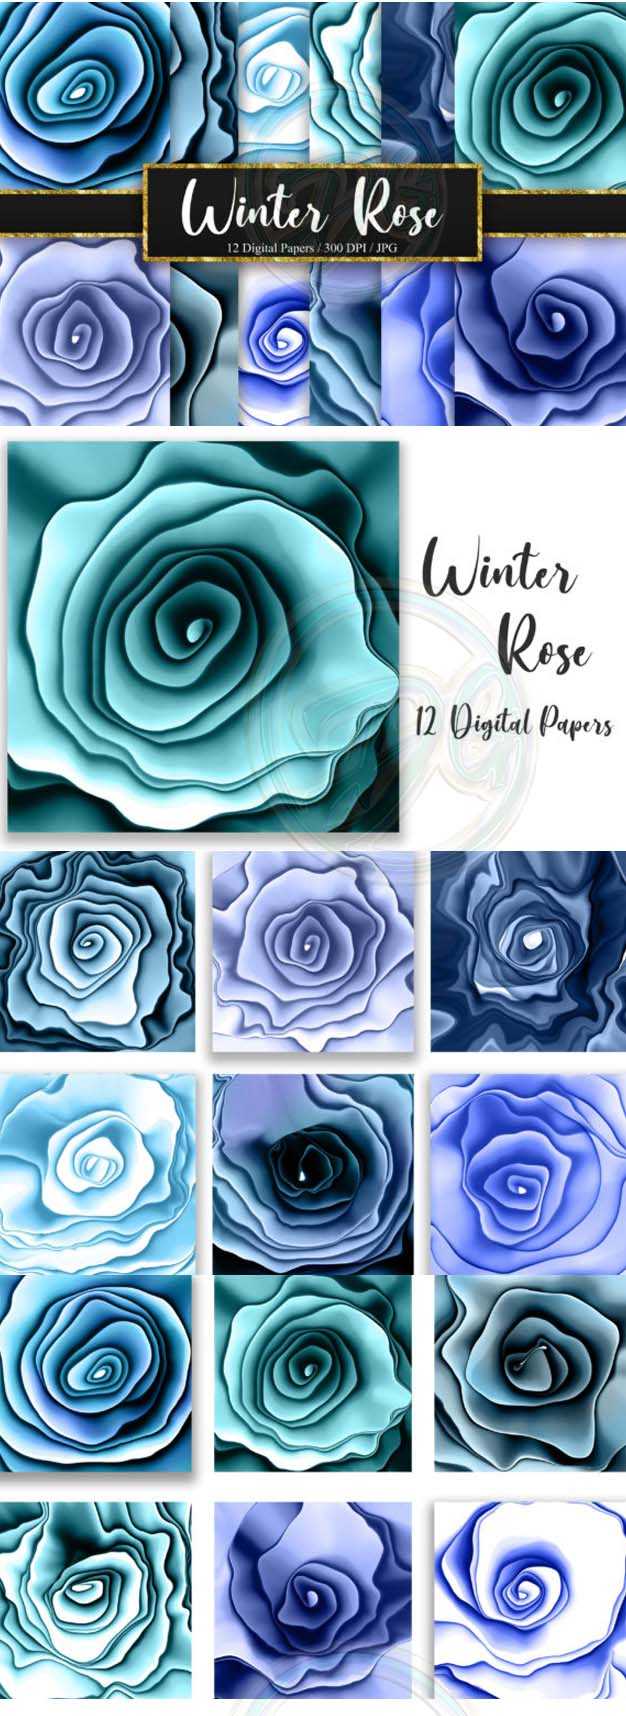 Winter Rose Ink Background Free